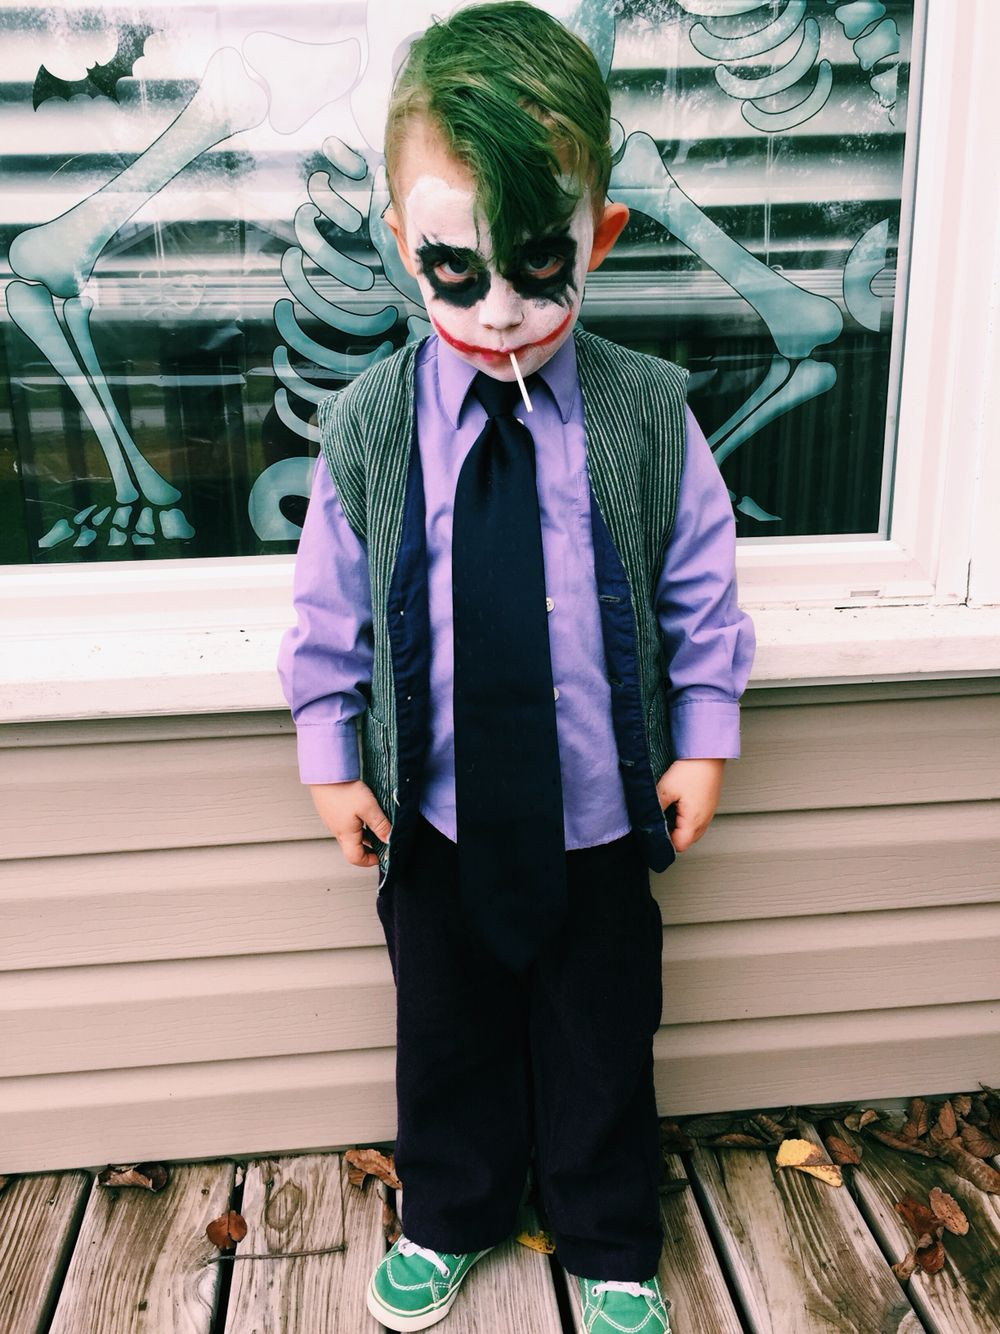 Best ideas about DIY Boys Halloween Costume
. Save or Pin DIY Joker toddler costume Halloweenie Now.